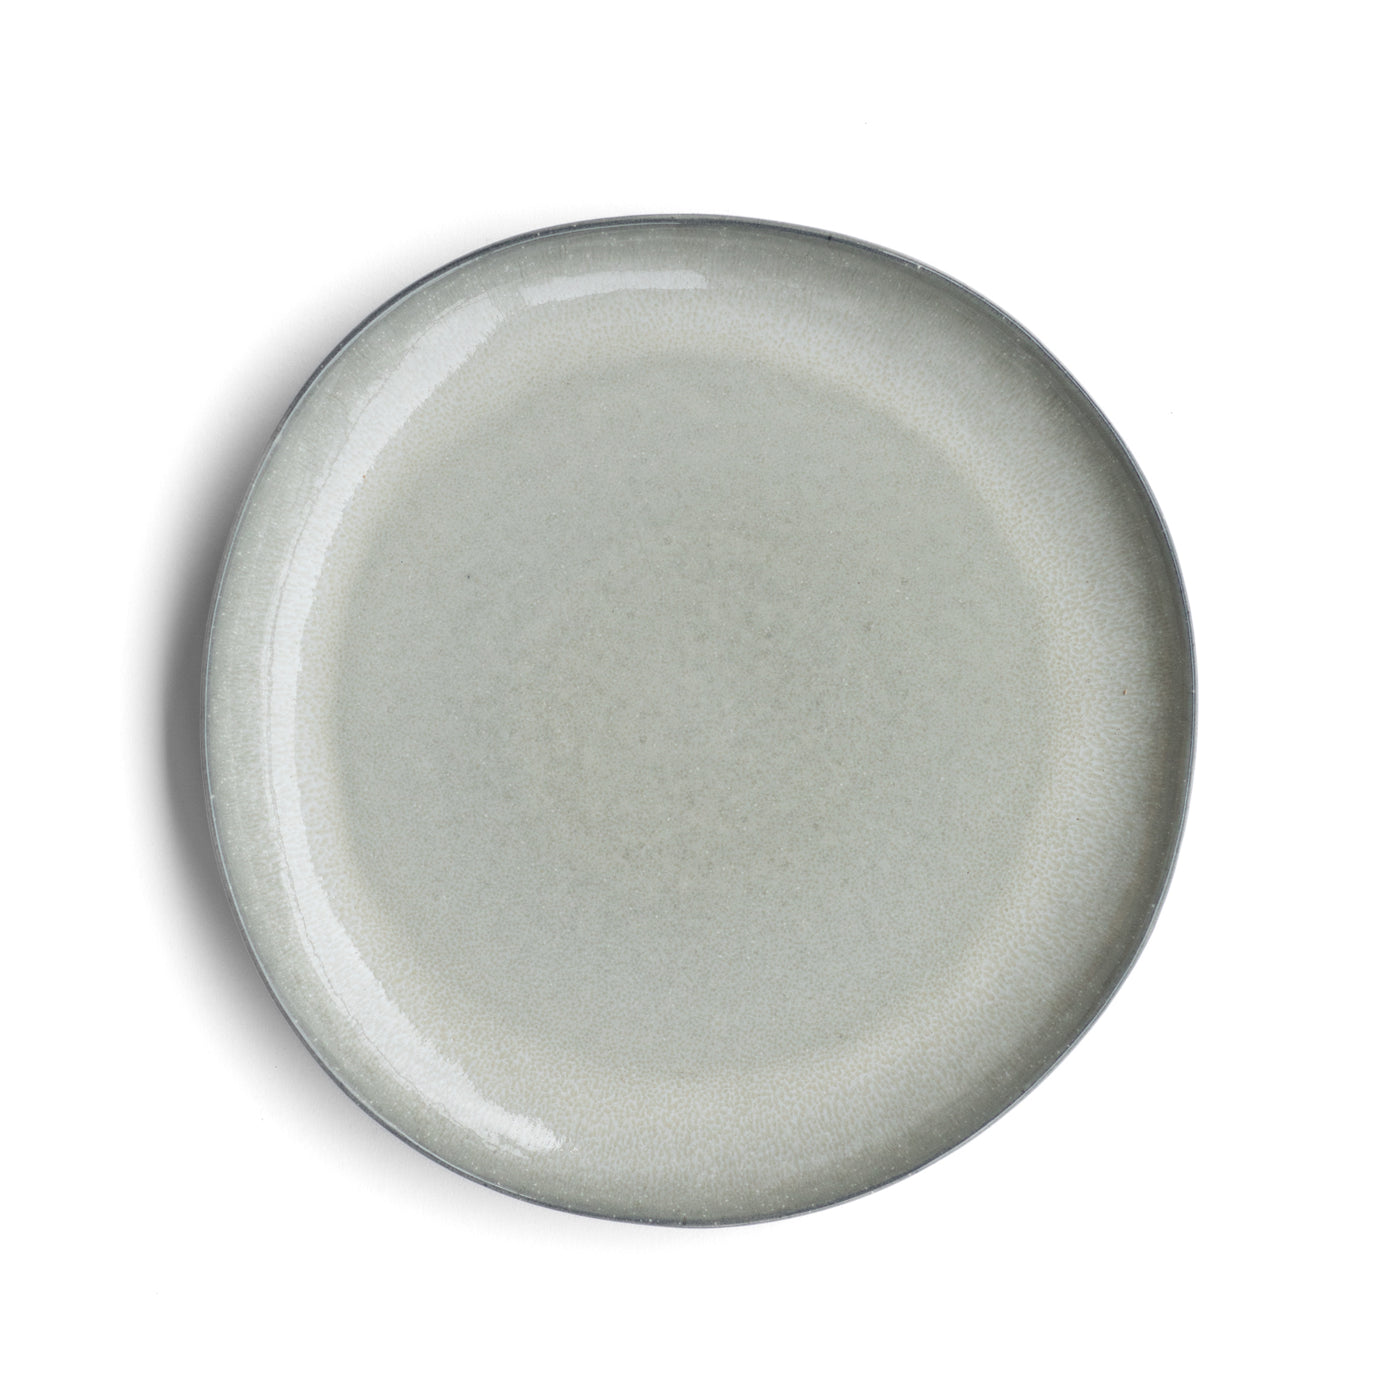 Large plate stoneware ceramic tableware gray reactive glaze handmade in Portugal